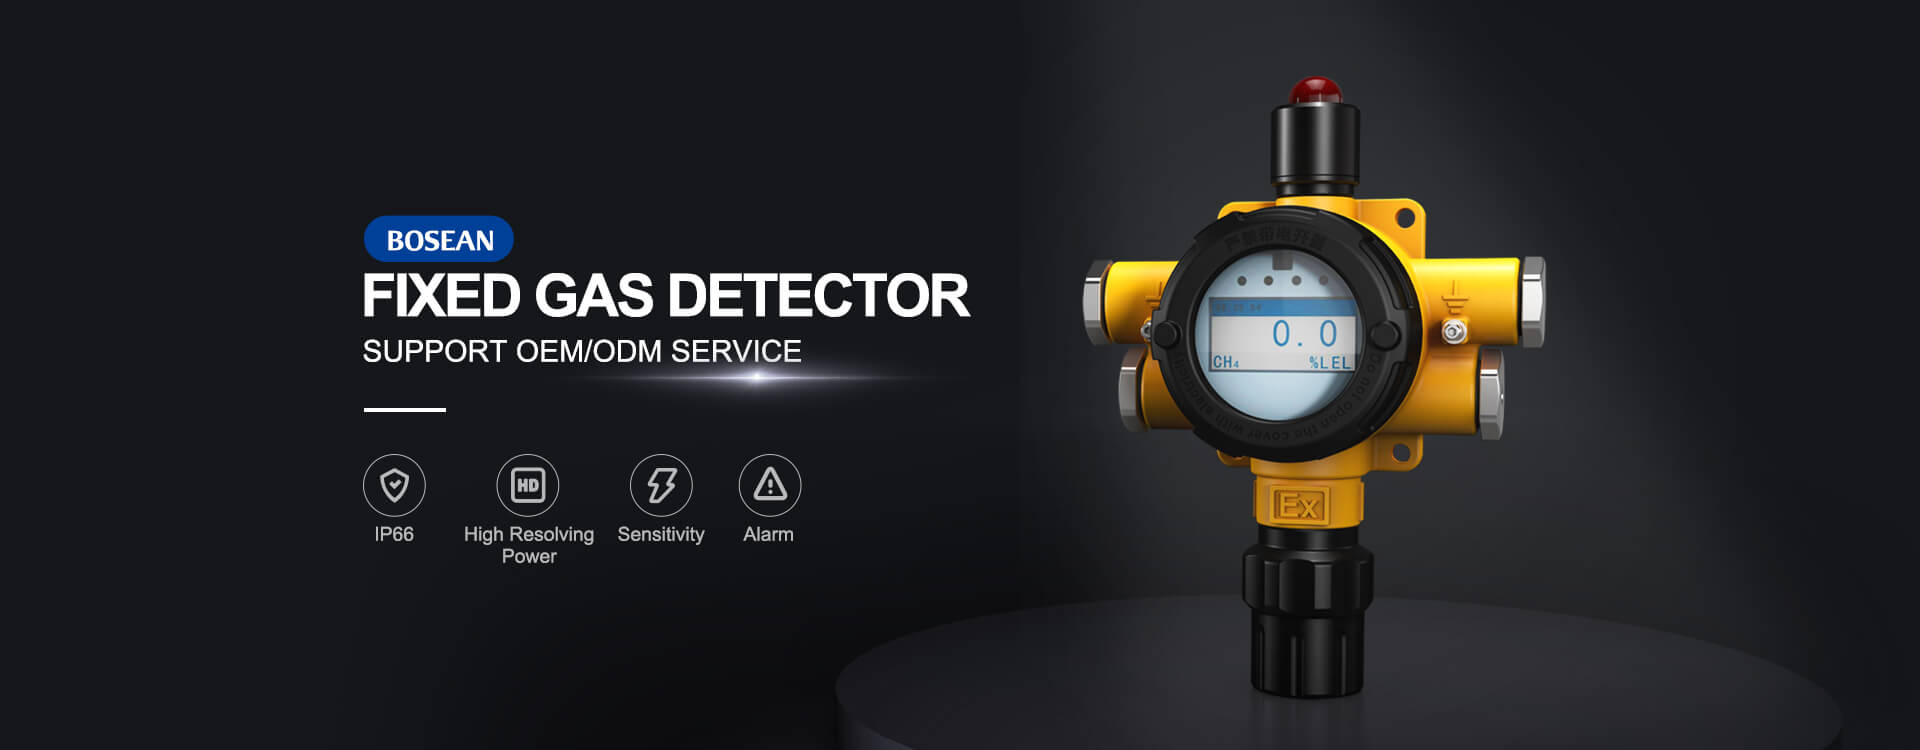 GT-K90 fixed gas detector IP66